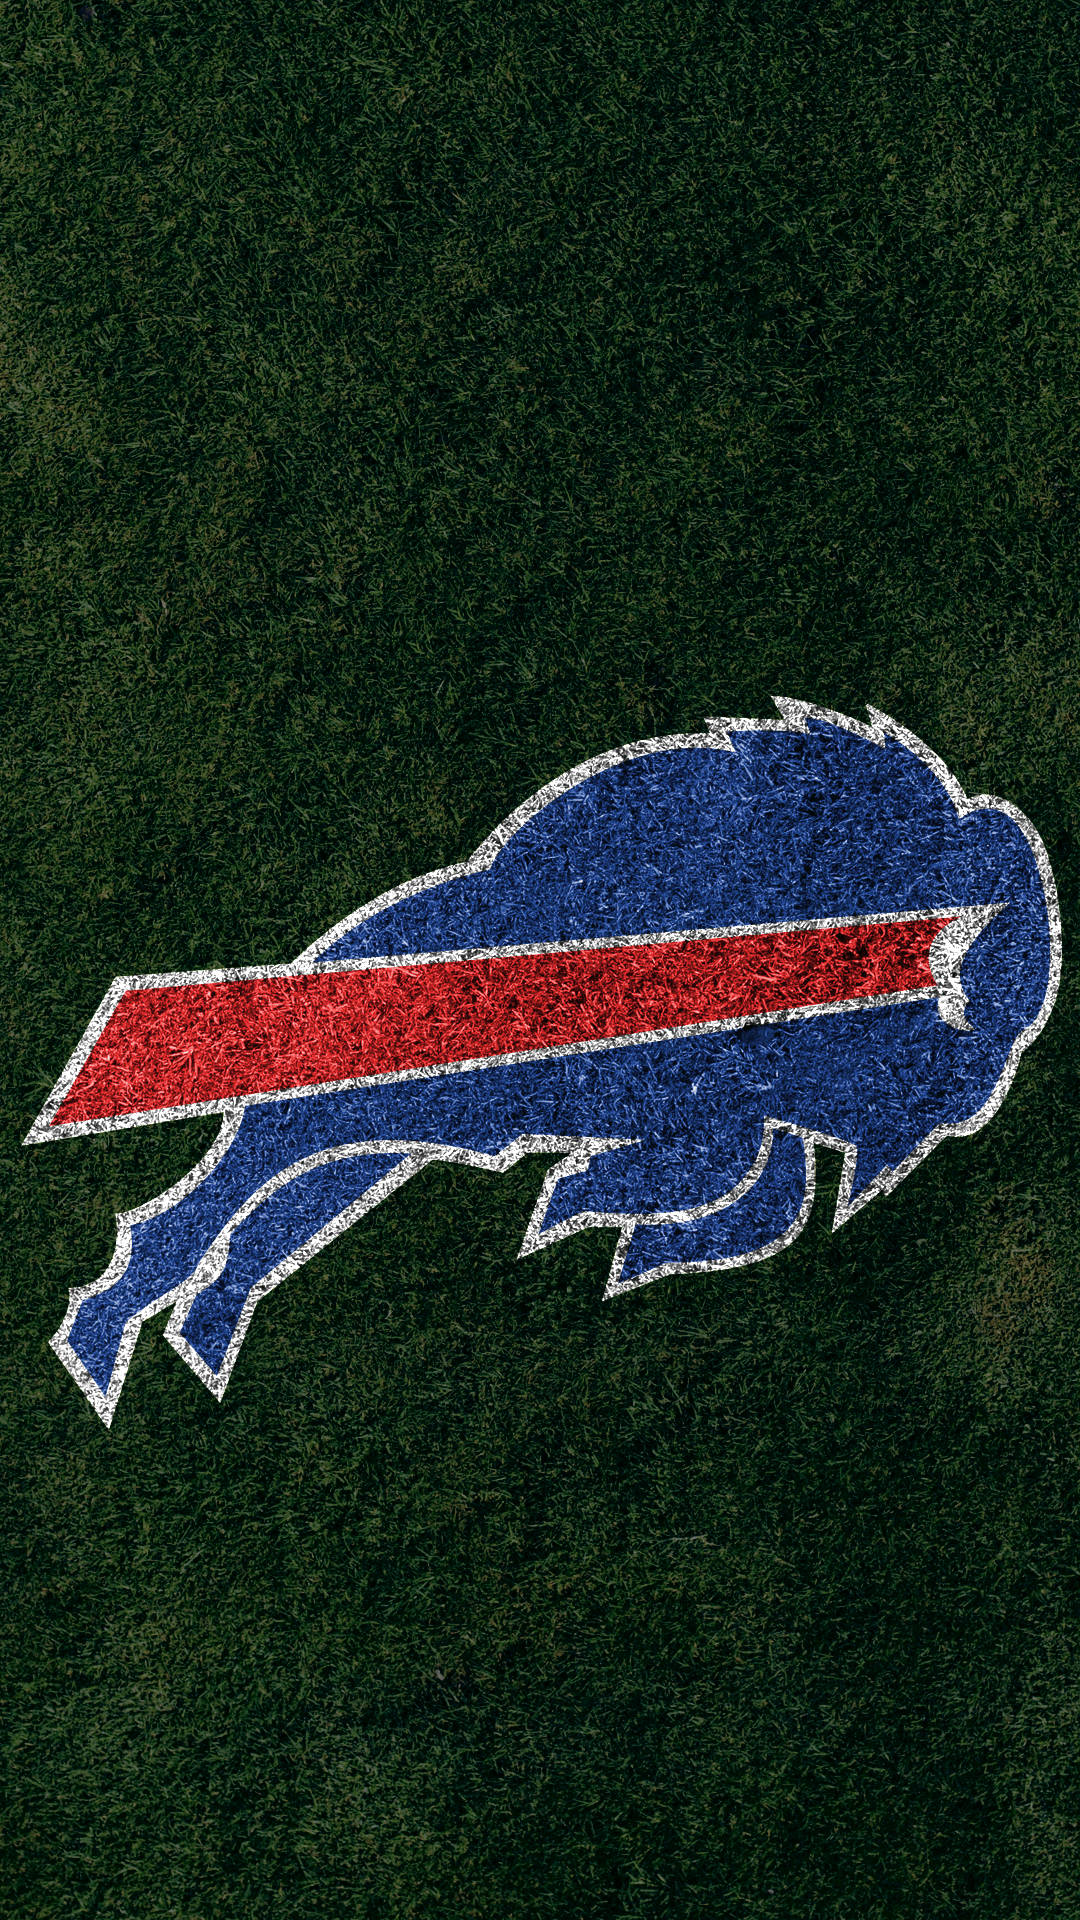 Buffalo Bills Big On The Ground Wallpaper